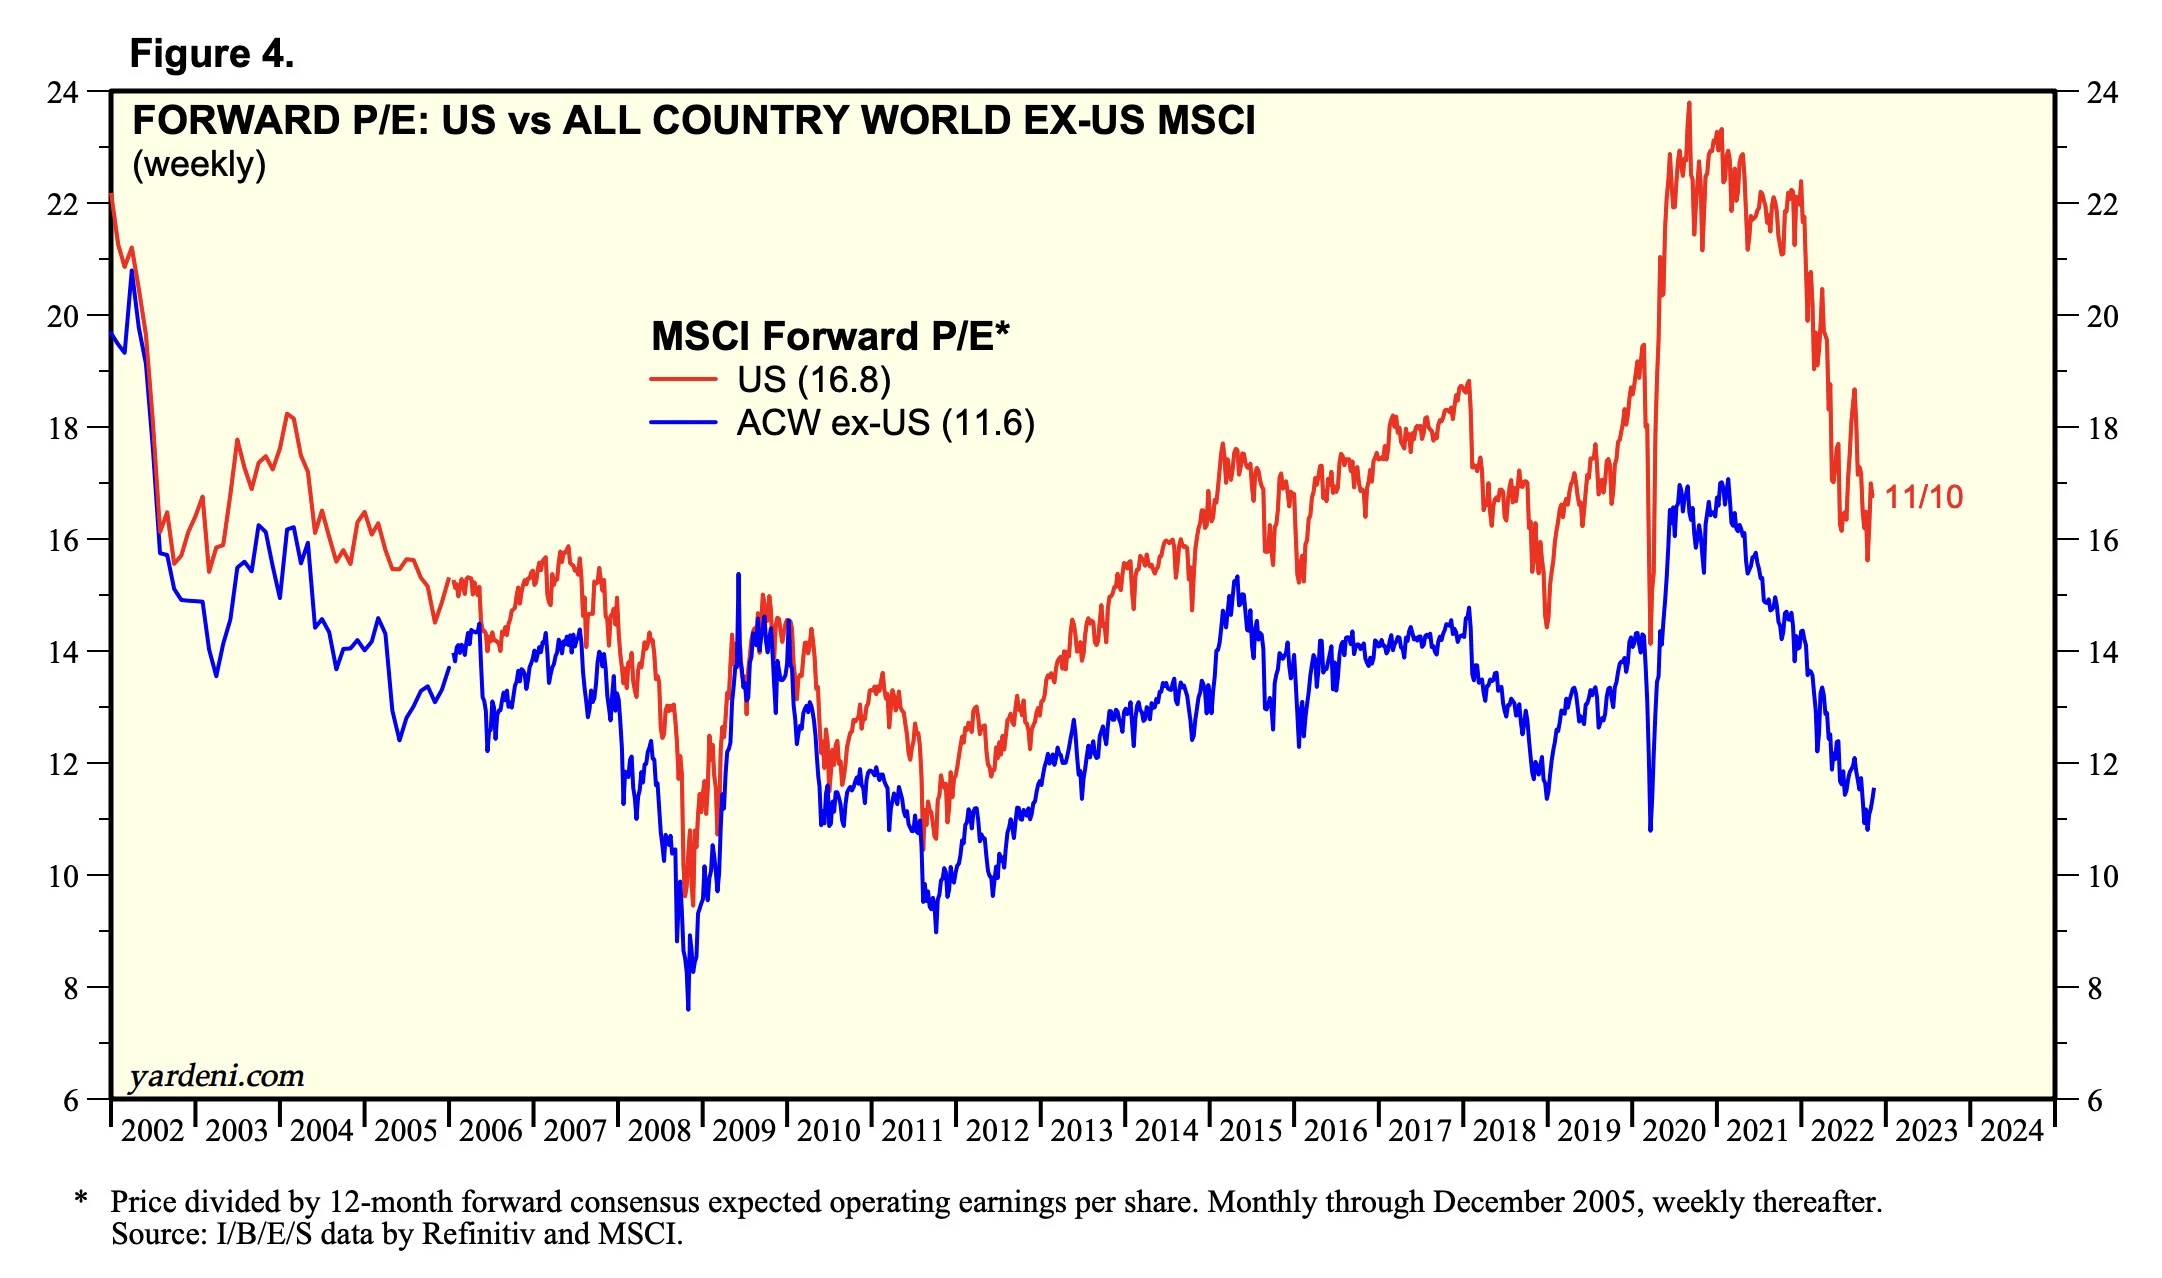 MSCI US vs ACW ex-US Forward P/E